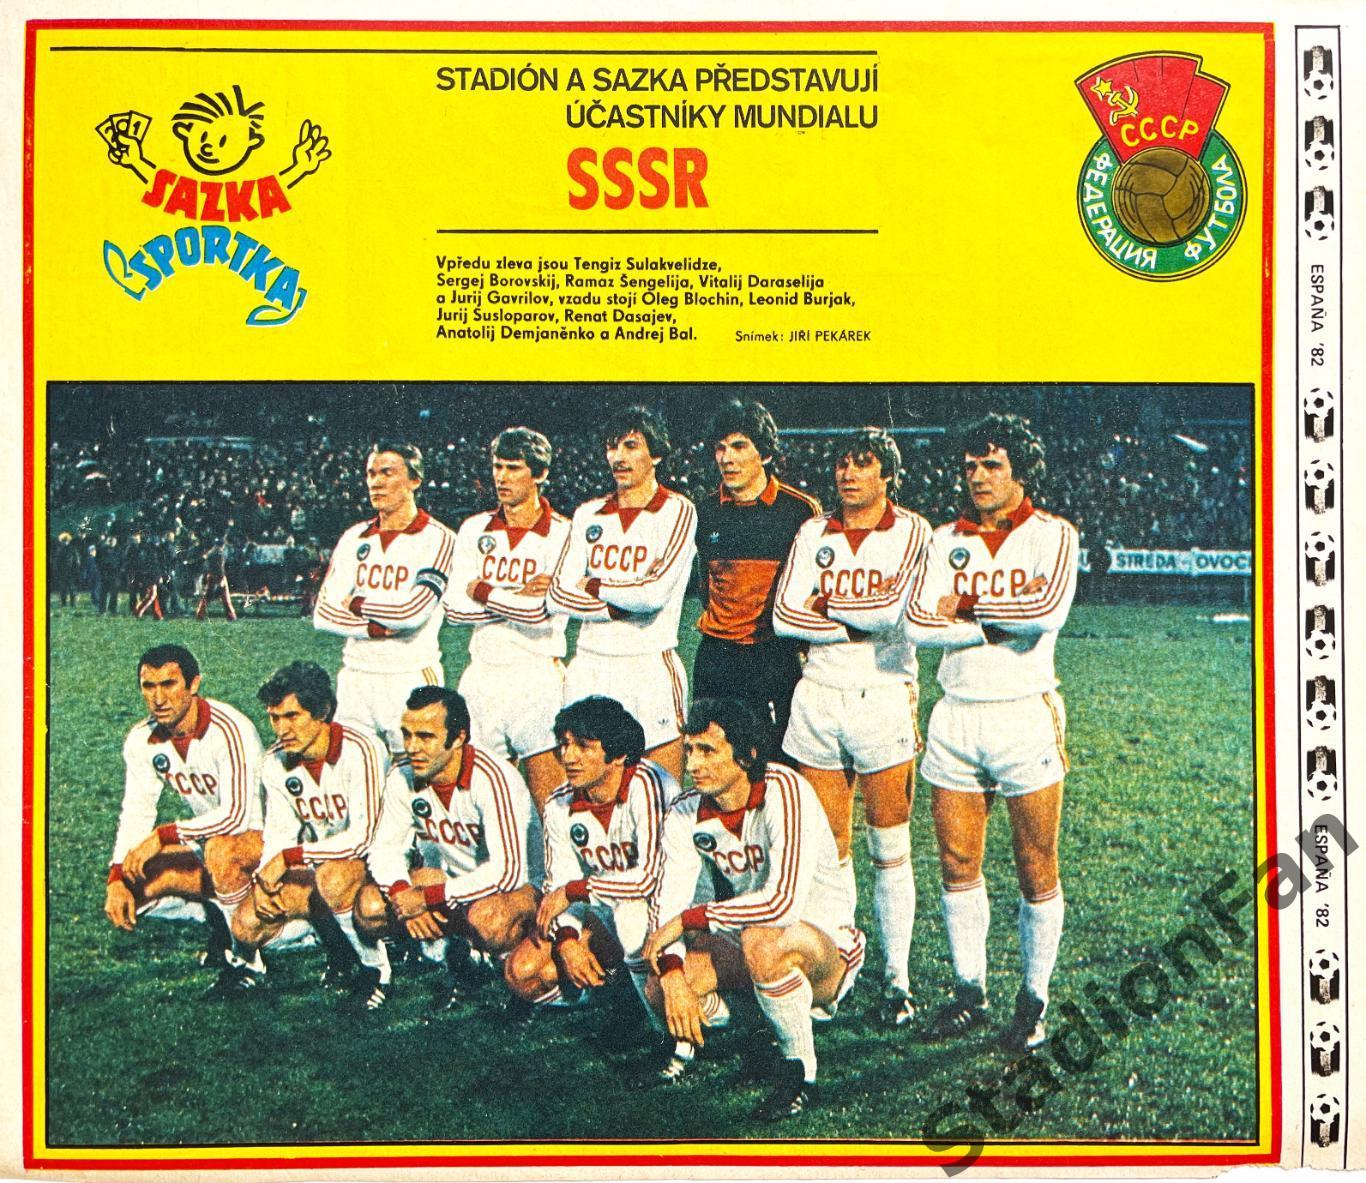 Постер из журнала Stadion (Стадион) - SSSR 1982